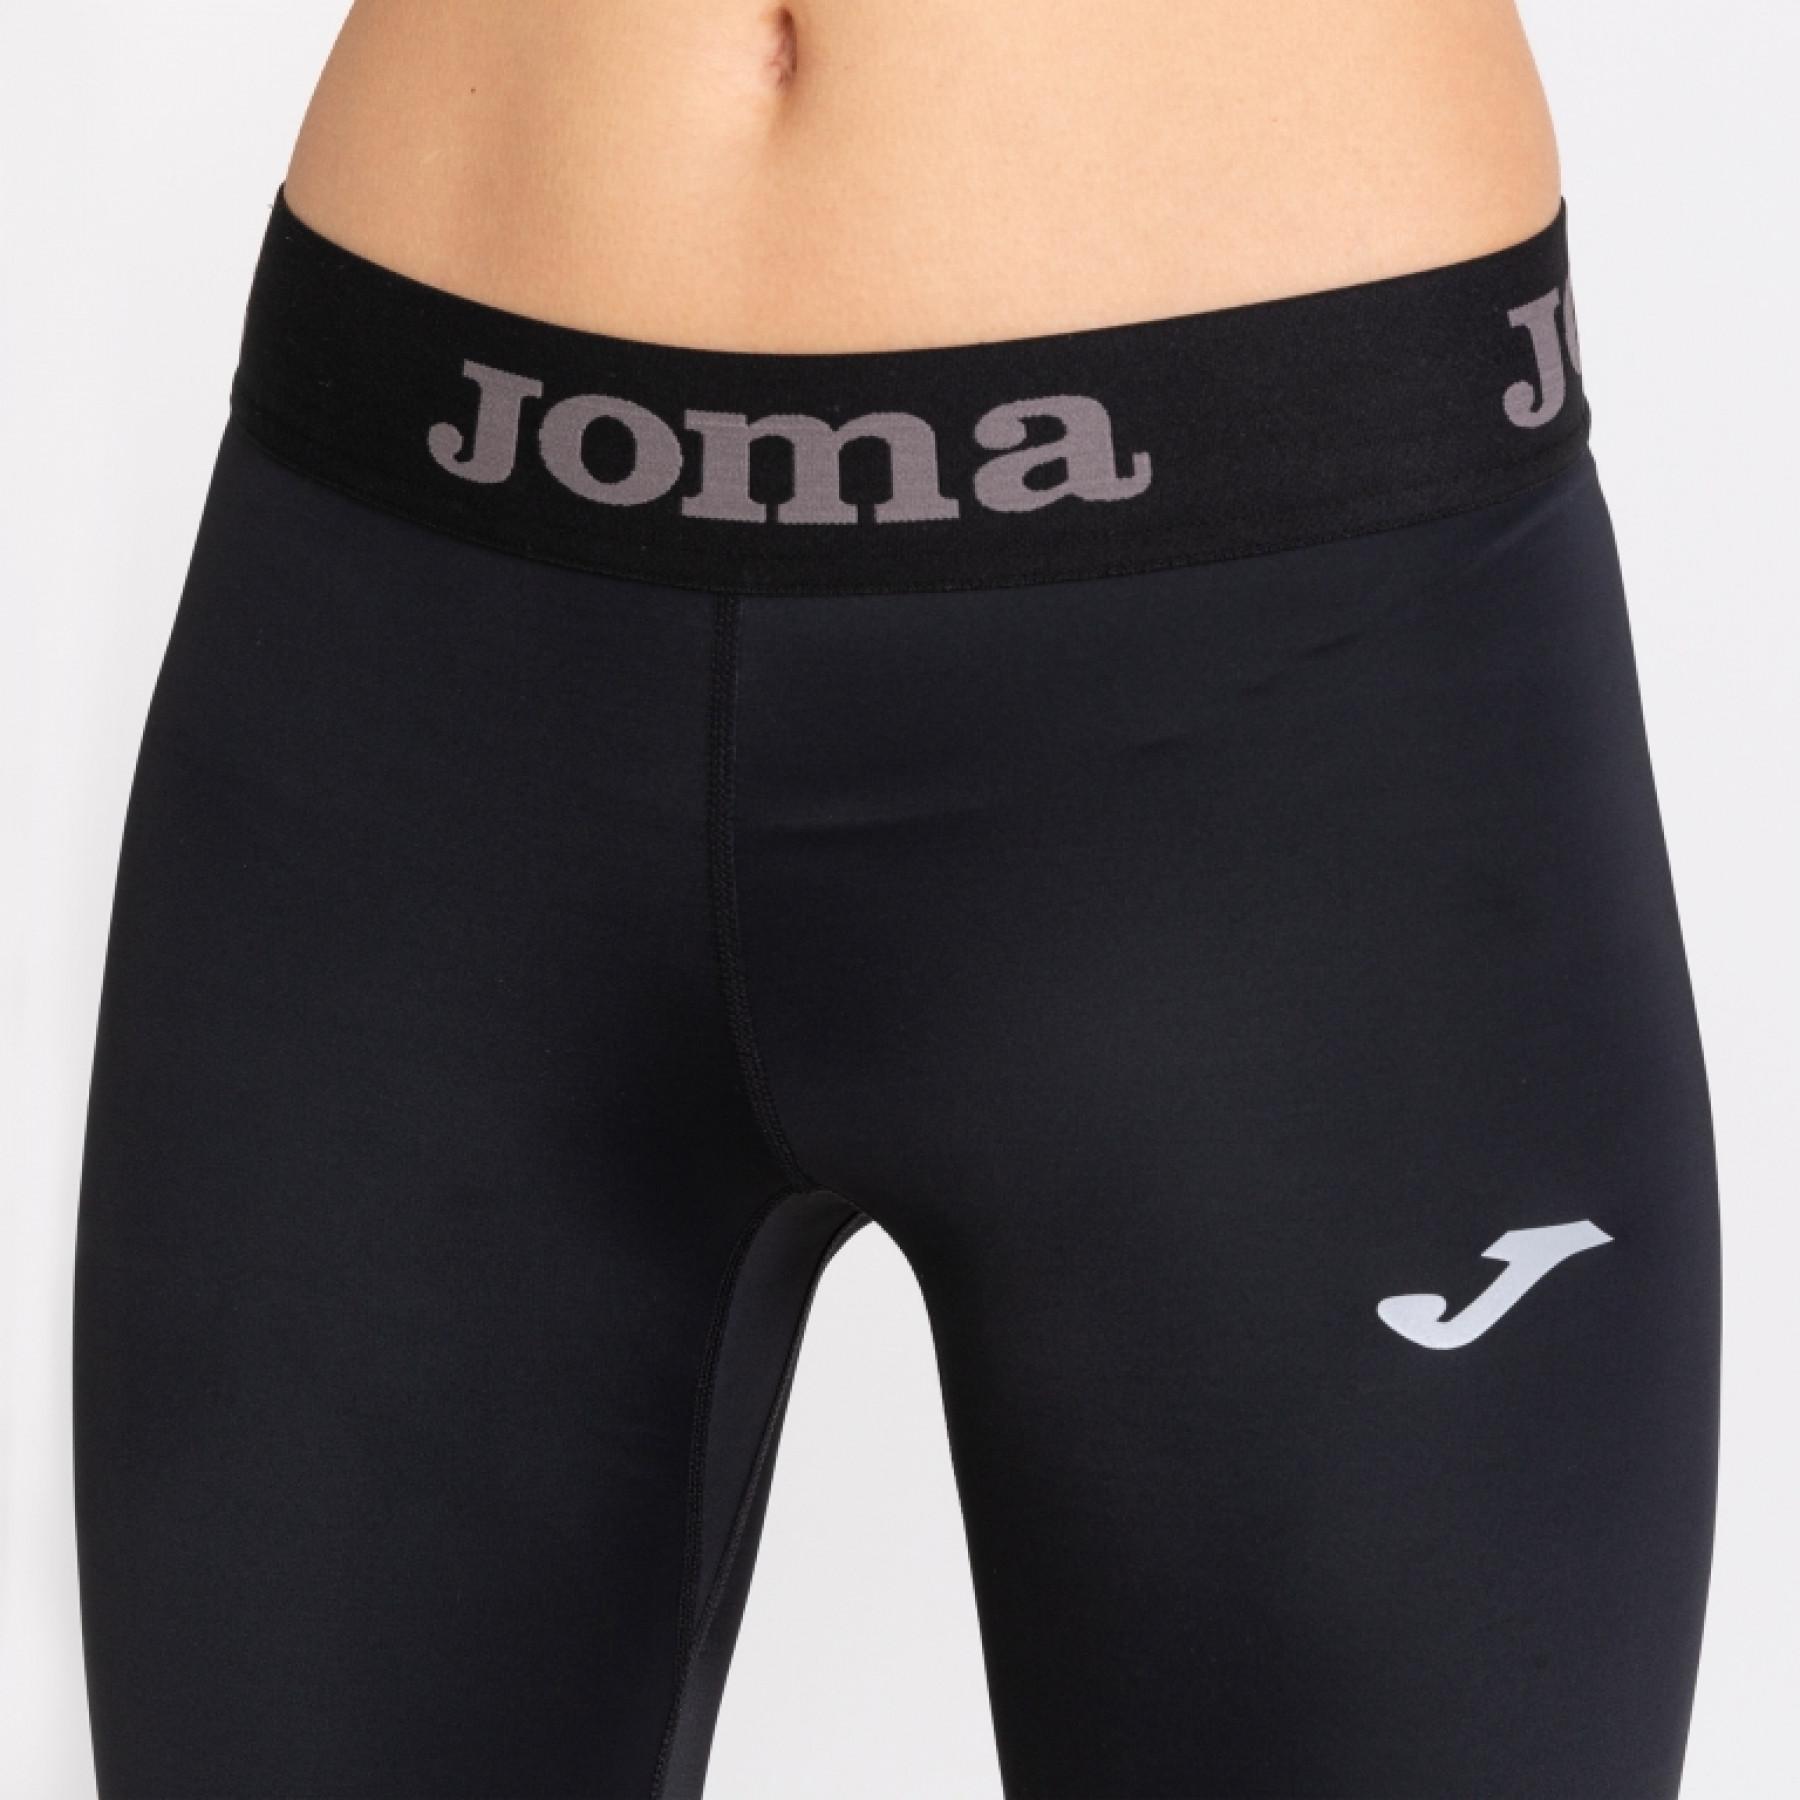 Spodnie kompresyjne dla kobiet Joma